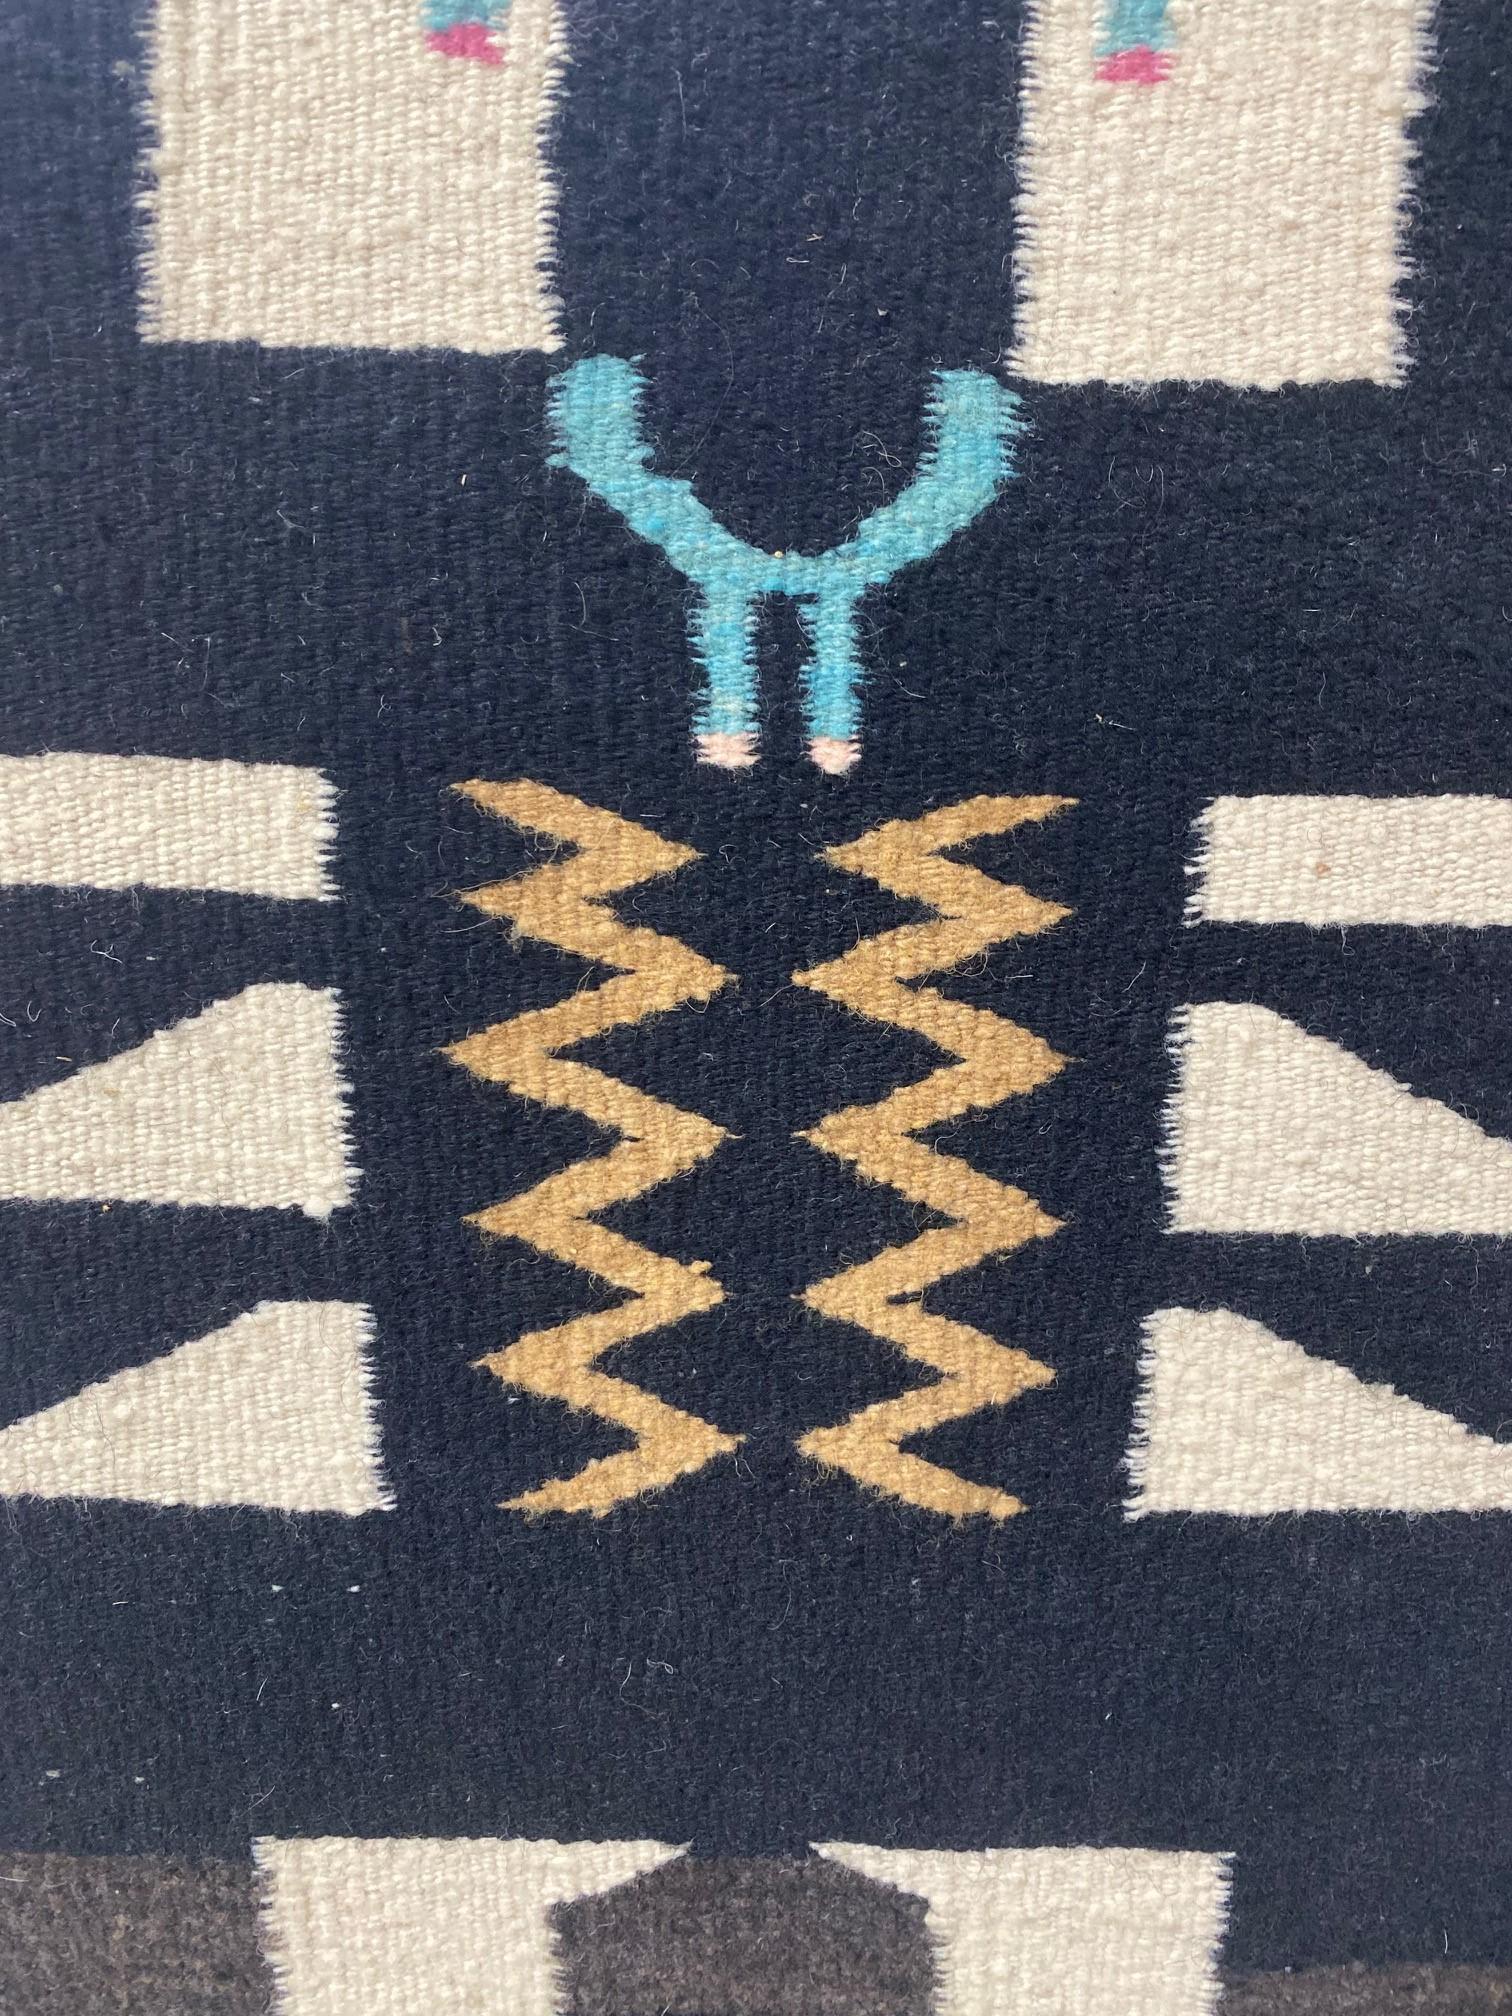 Handwoven Native American Navajo Yei Yeibichai Pictorial Wool Rug Blanket 6